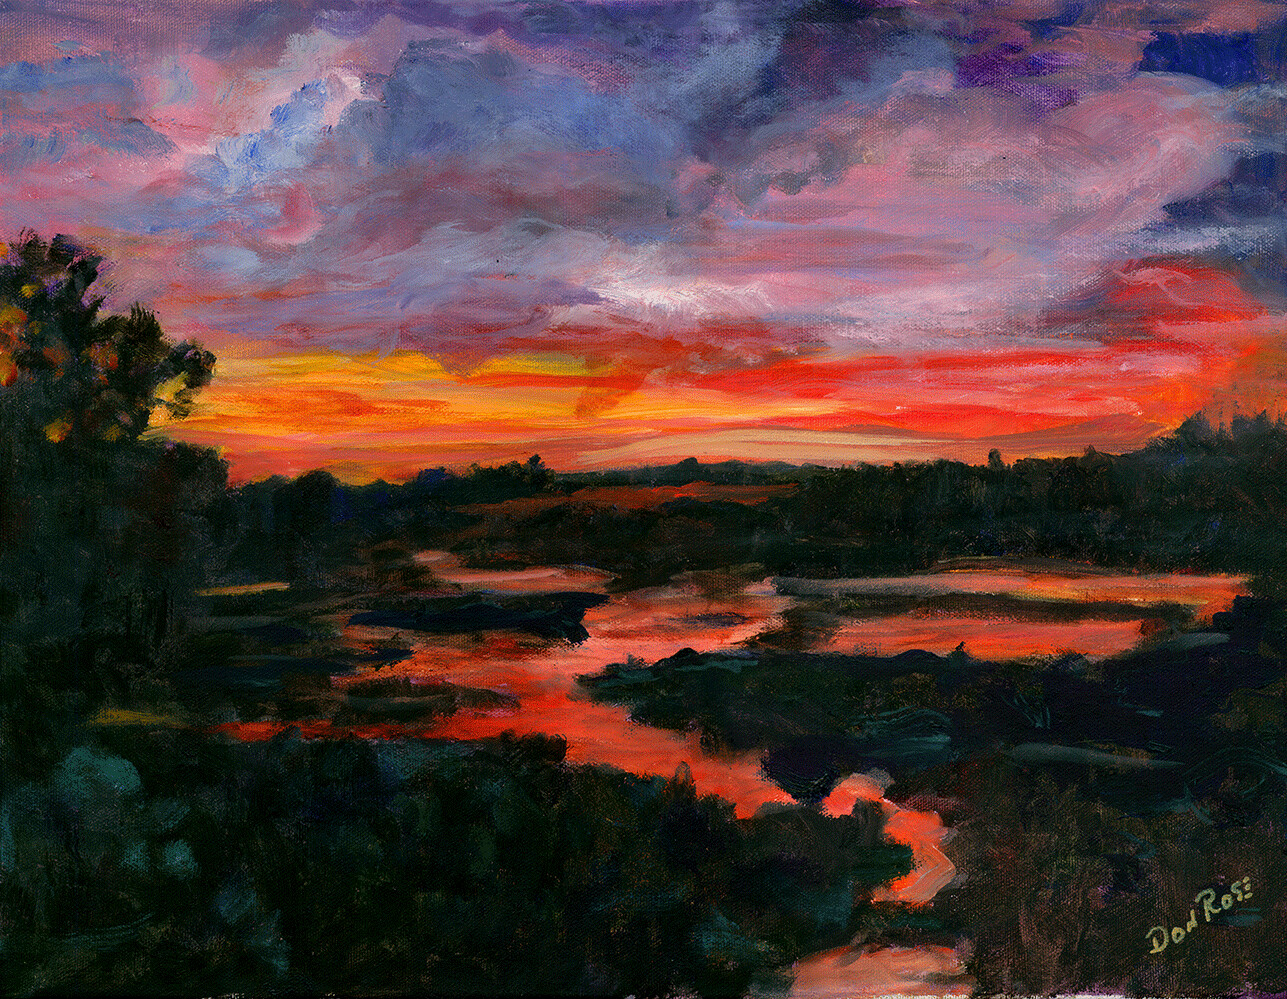 "Sunset Marsh" by Don Rose